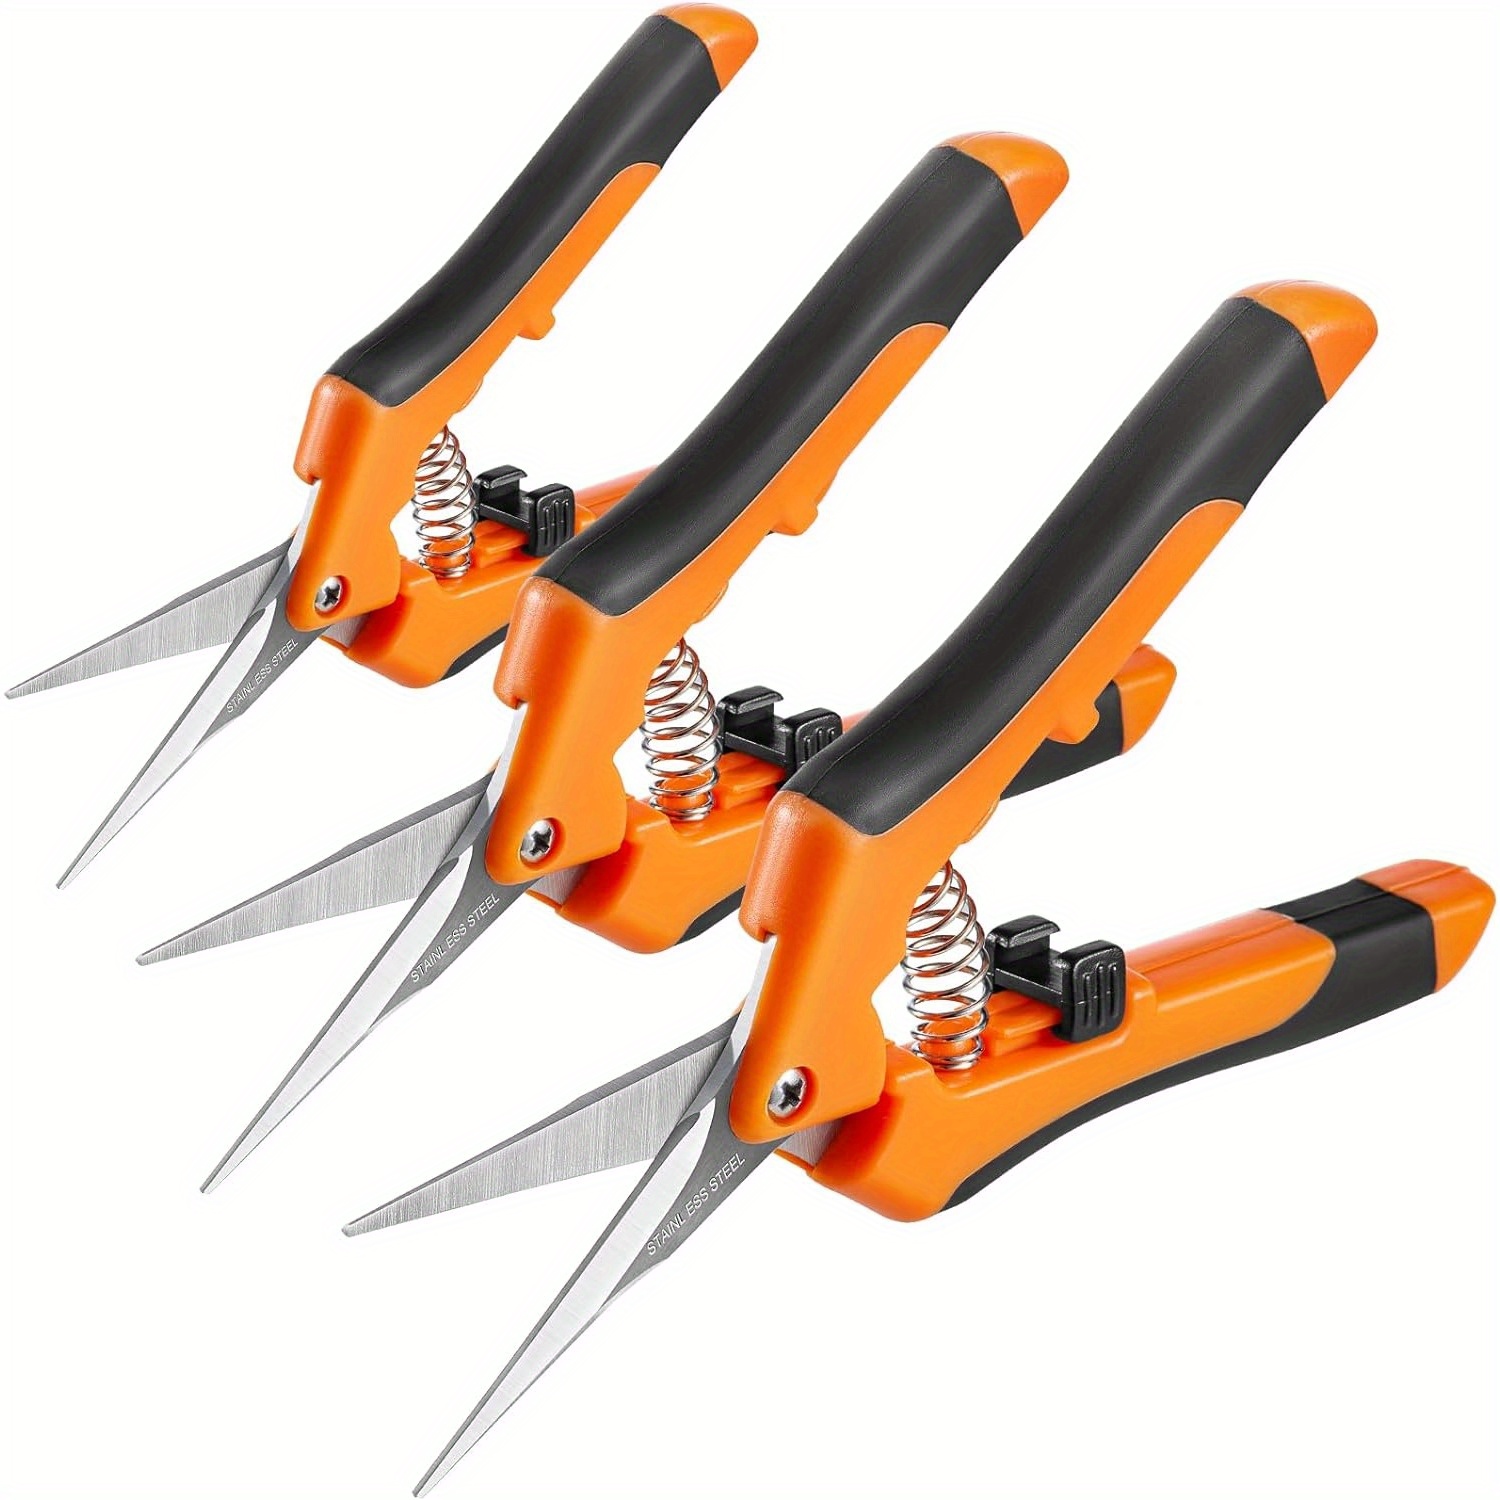 

3 Packs 6.5 Inch Pruning Shears Gardening Hand Pruning Snips Gardening Scissors With Straight Stainless Steel